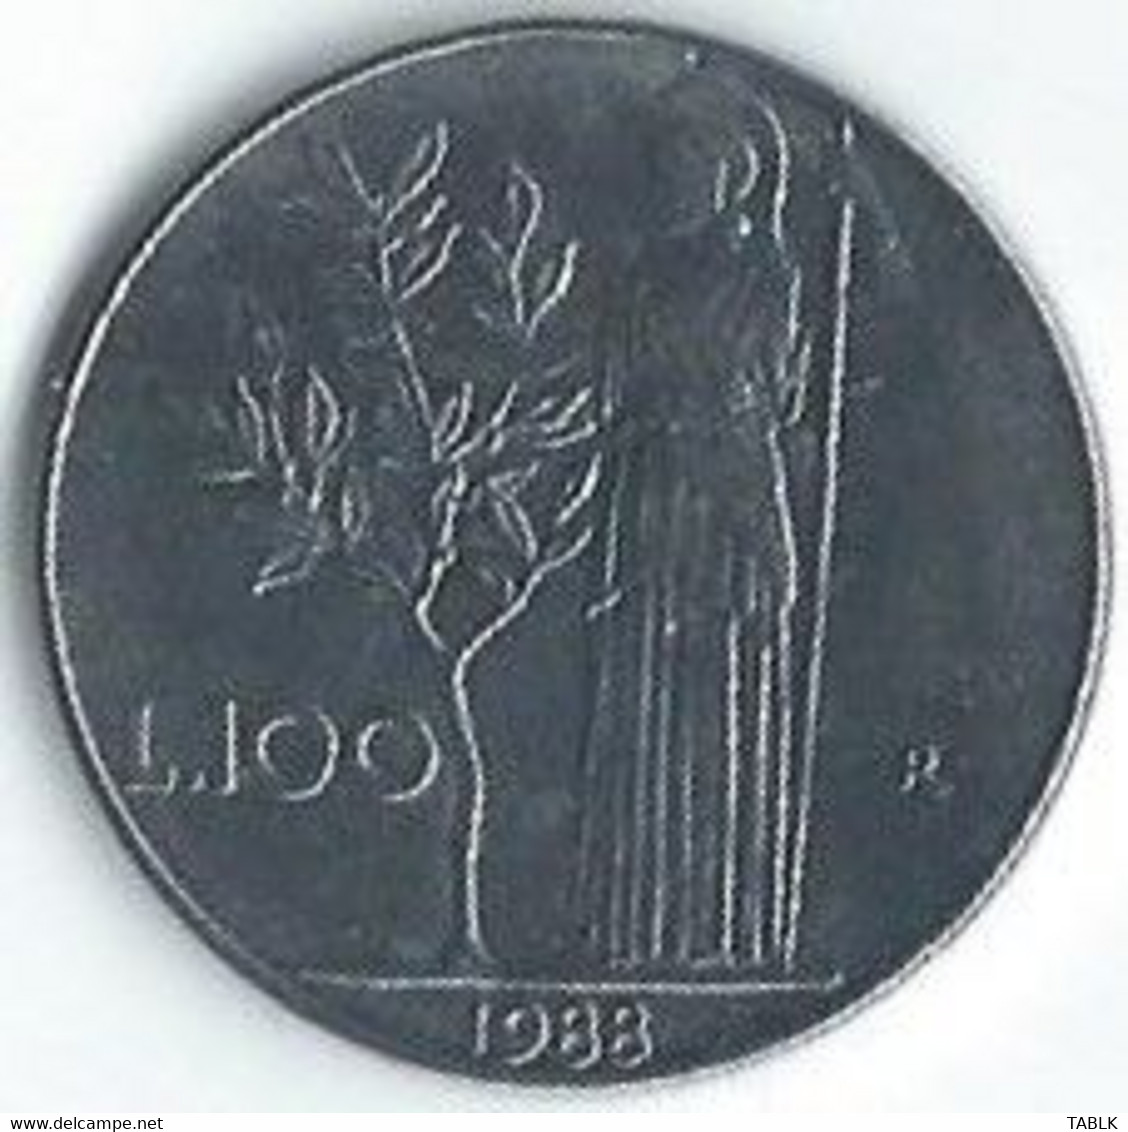 MM396 - ITALIË - ITALY - 100 LIRE 1988 - 100 Lire